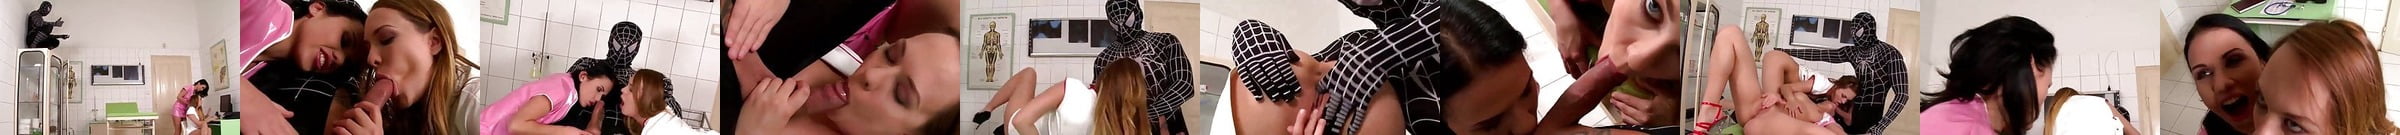 Spiderman Porn Videos Xhamster